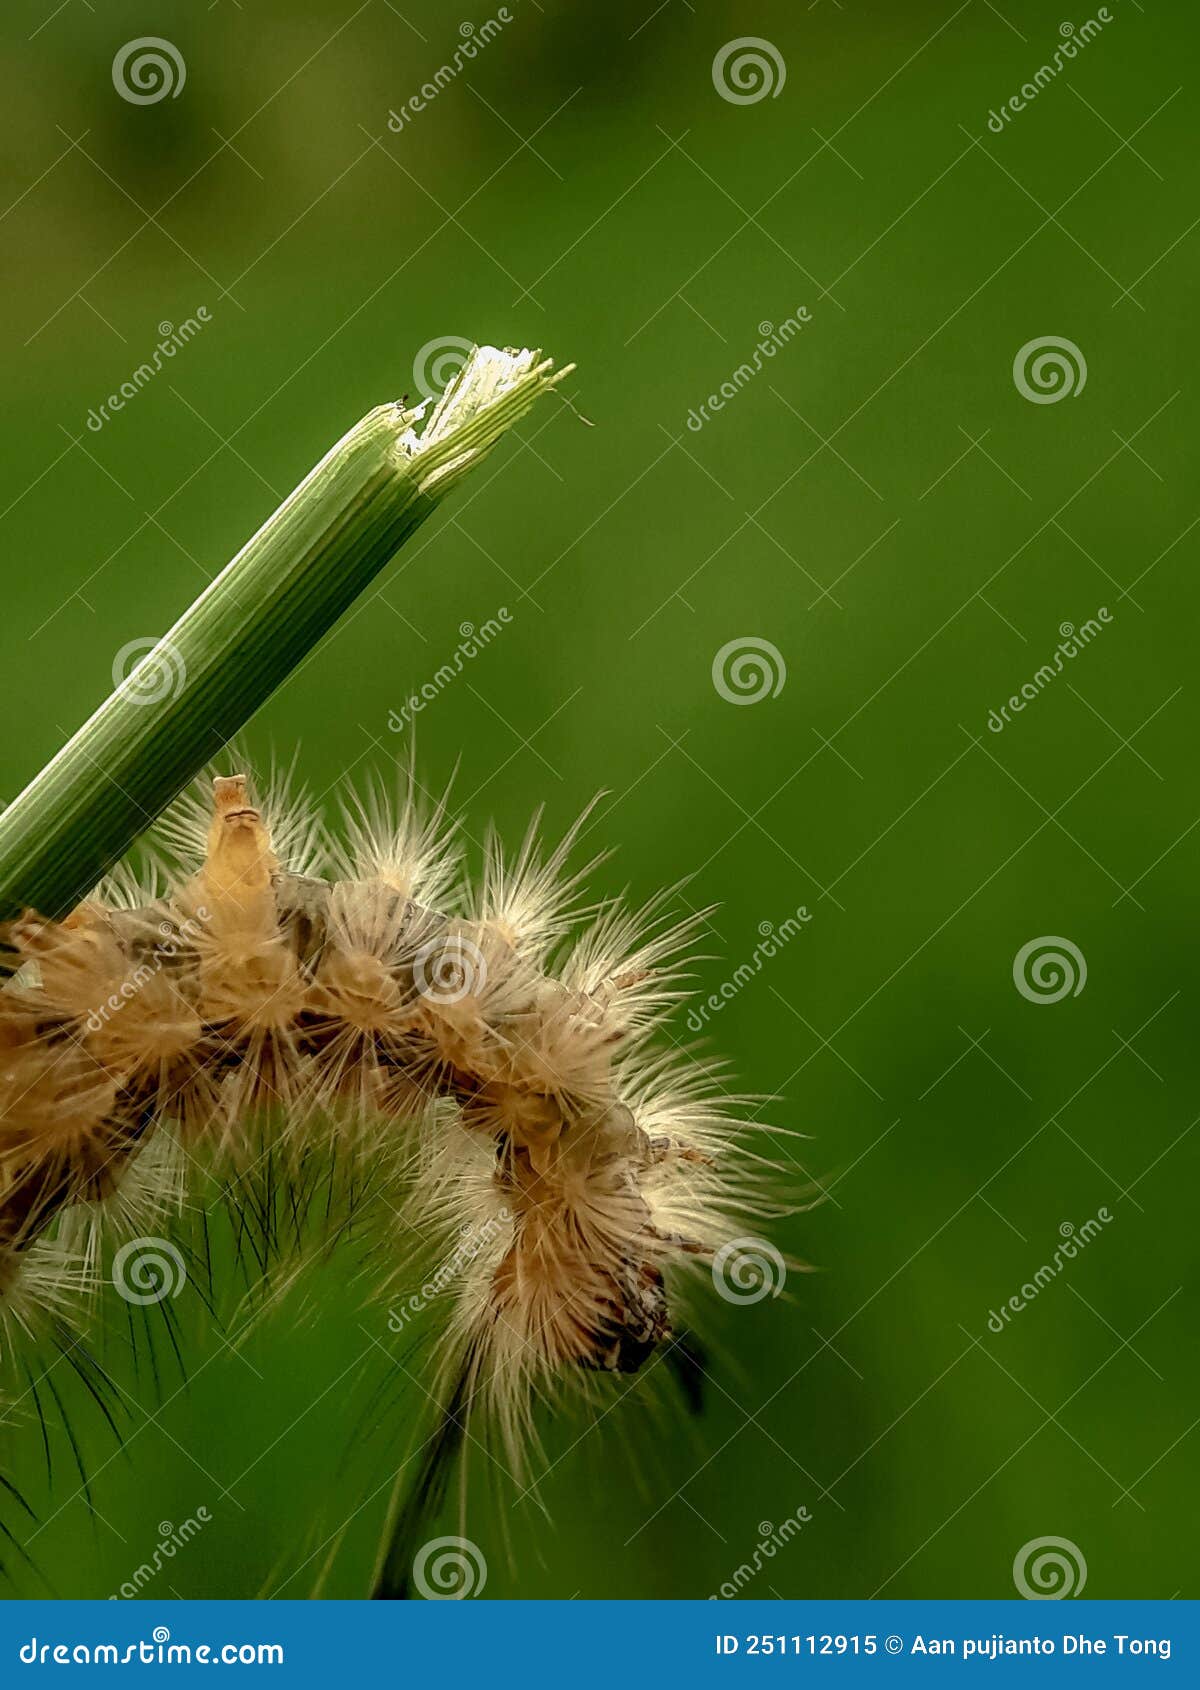 Forskel Pædagogik Talje Caterpillars that Have Poison Can Be Fatal To Human Skin. Insect, Animal,  Macro Stock Image - Image of four, metamorphosis: 251112915